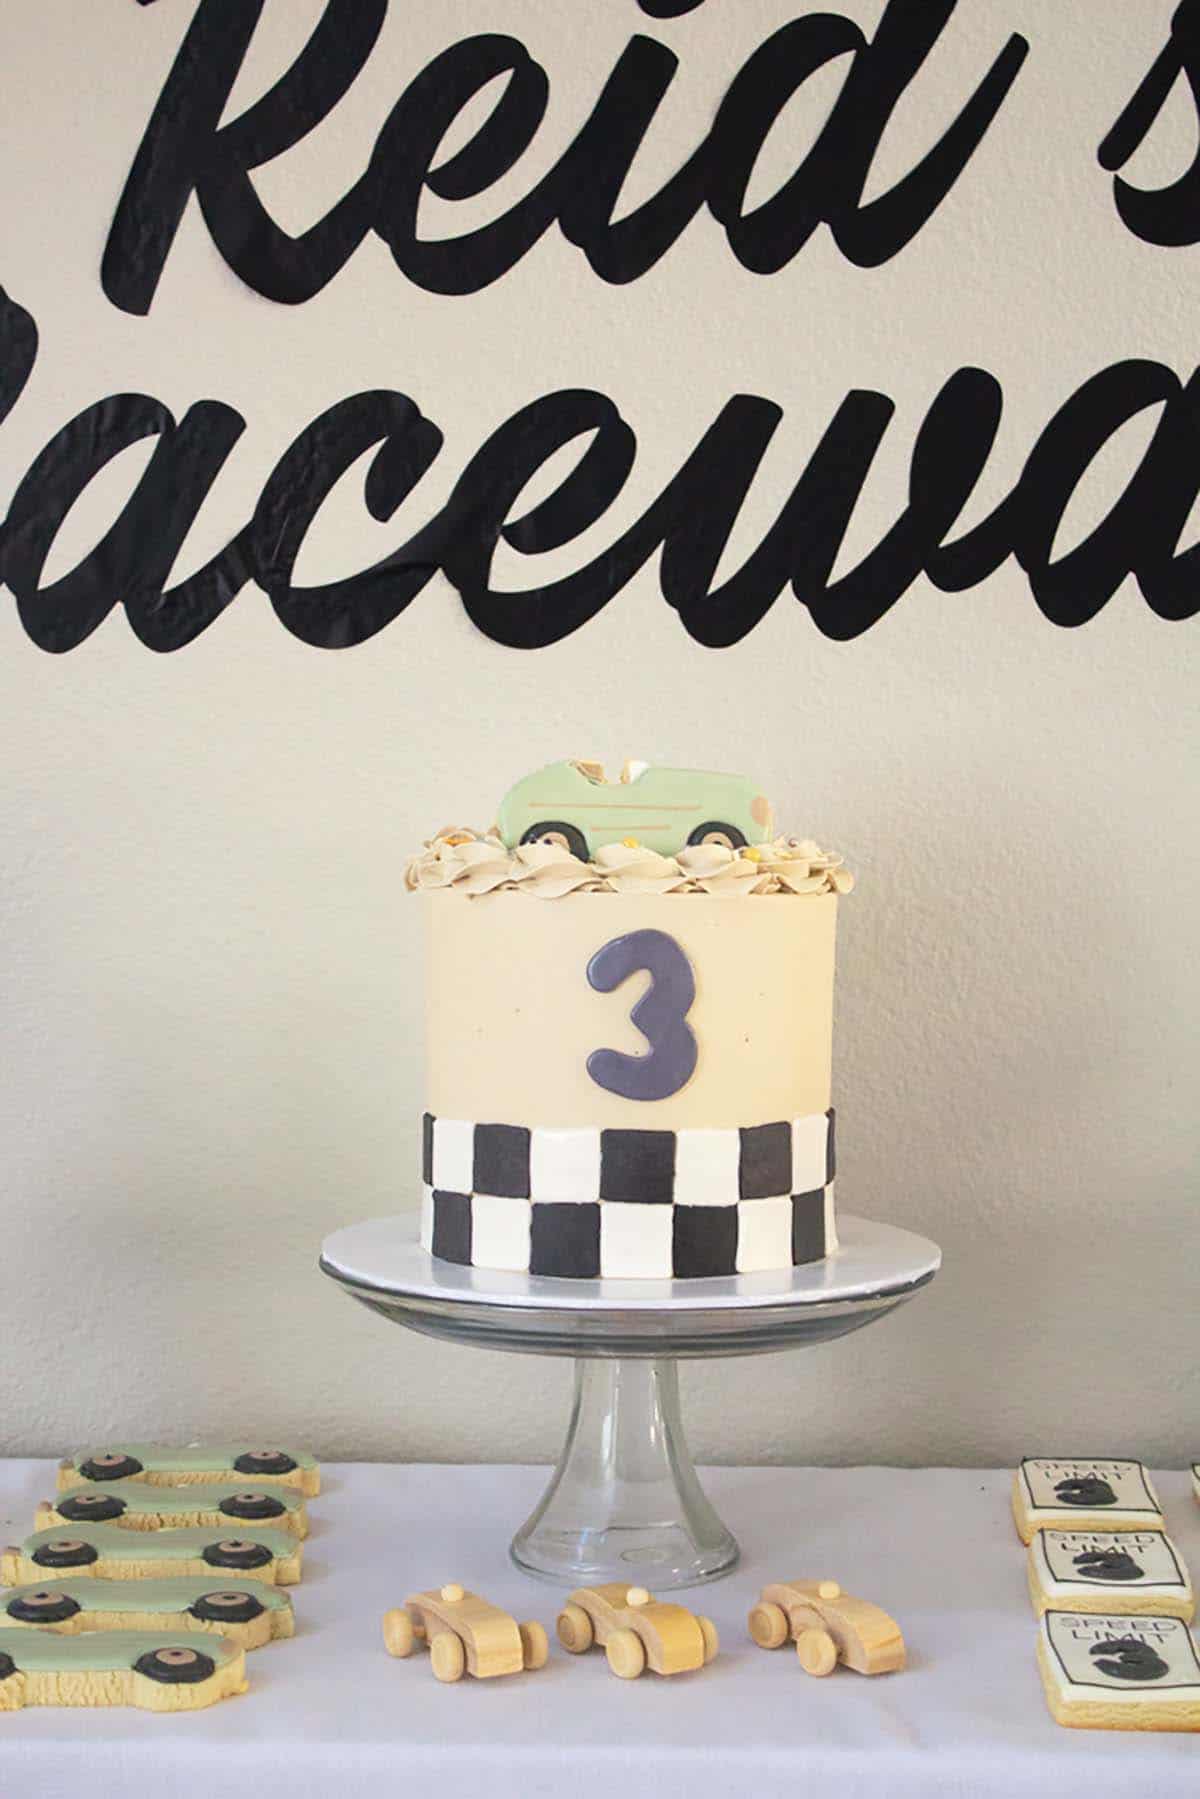 Race car theme cake